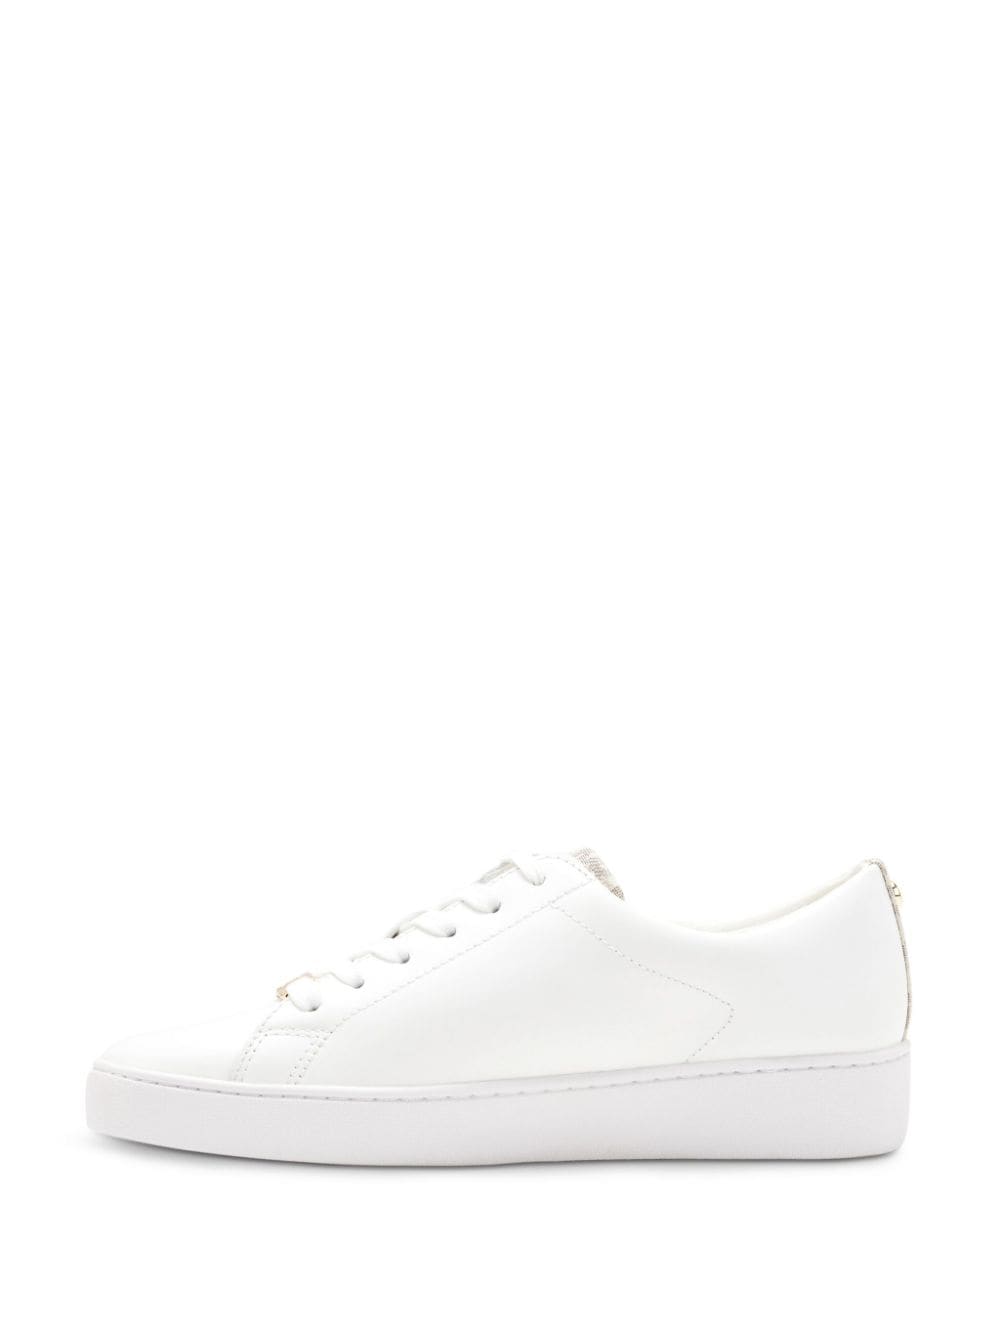 Shop Michael Kors Keaton Leather Sneakers In White